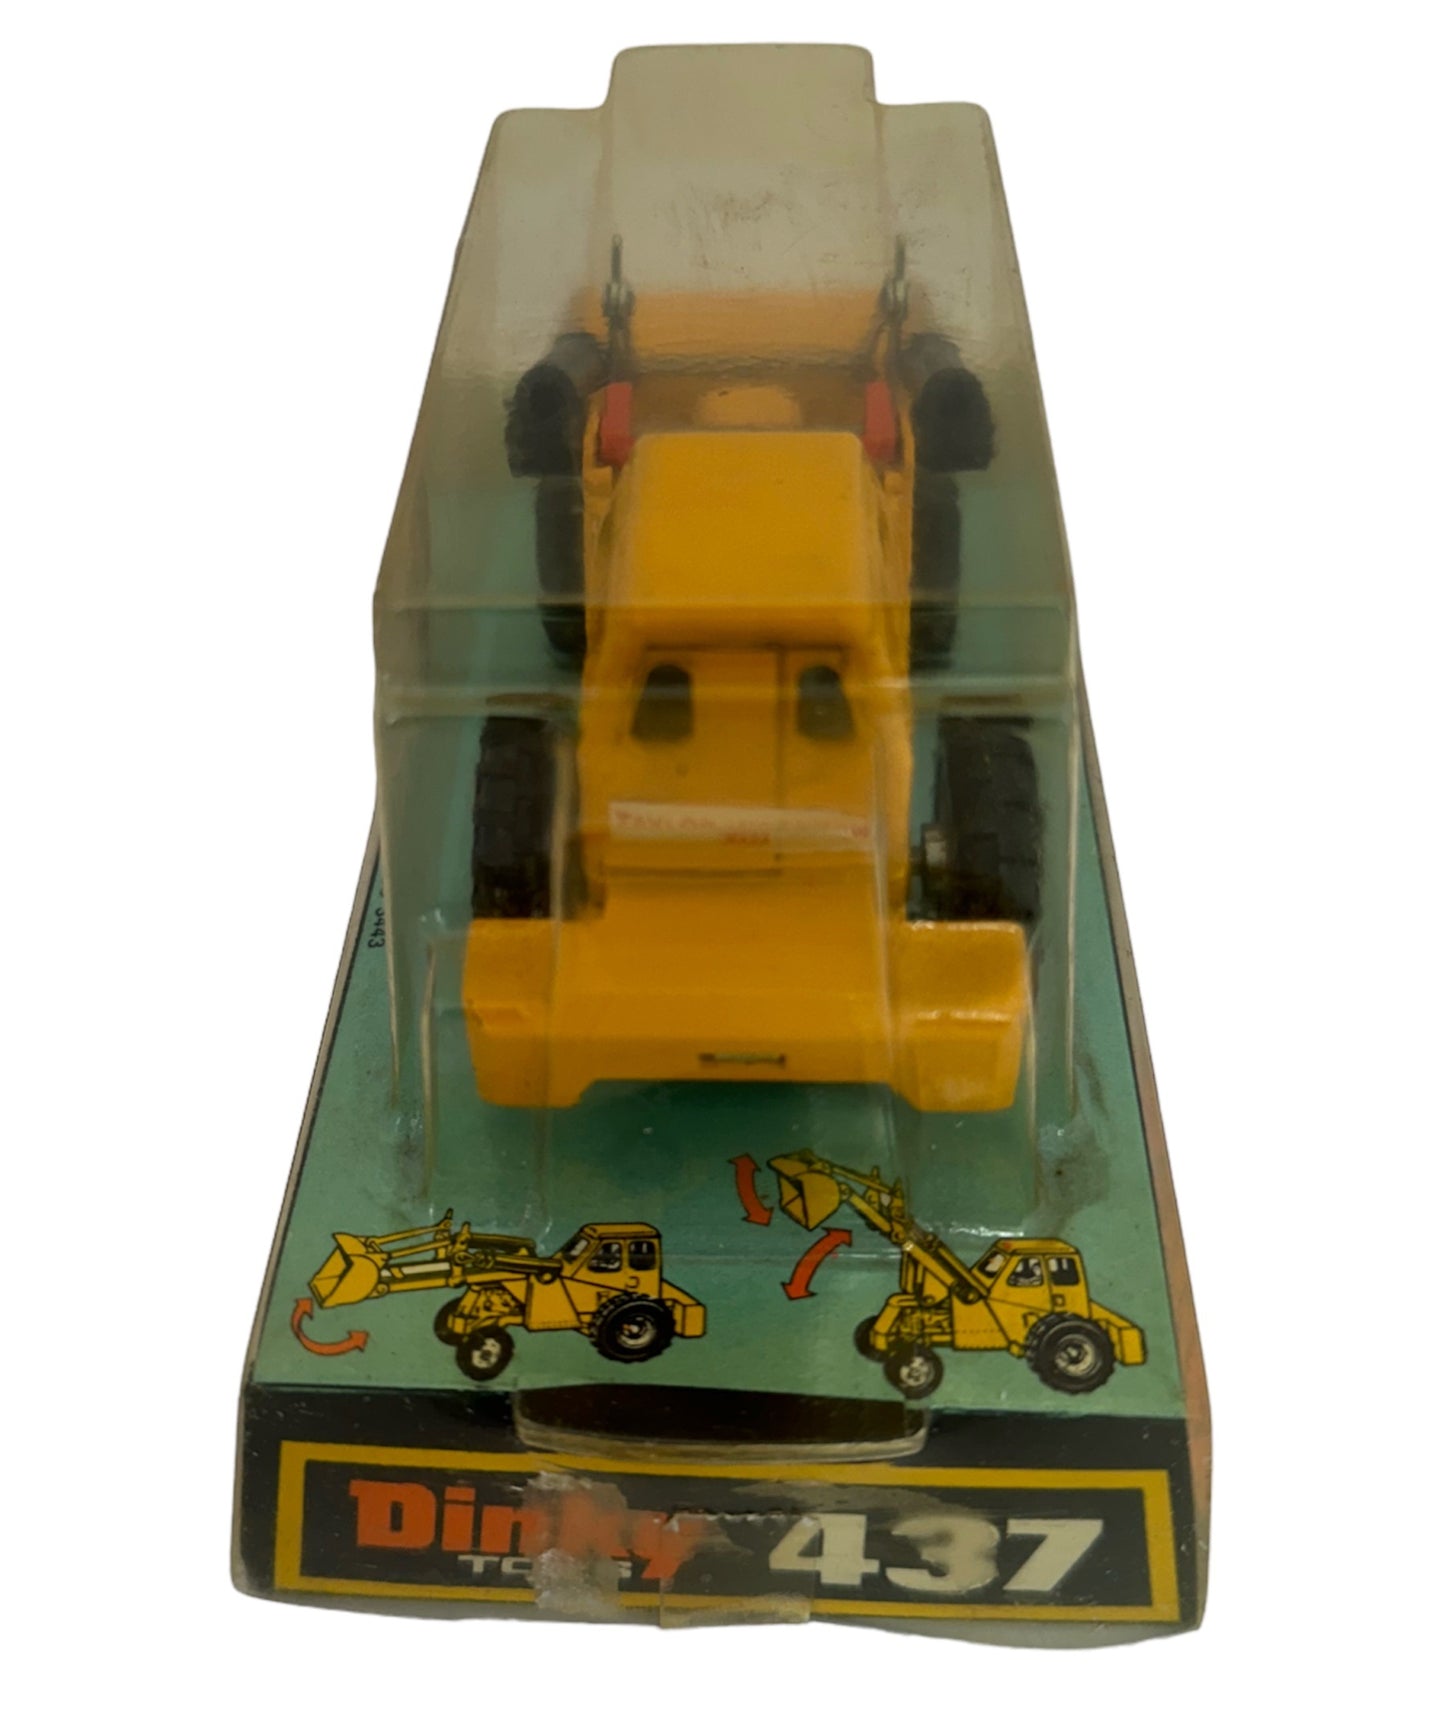 Vintage 1973 Dinky Toys No. 437 Muir Hill 2WL Loader Diecast Metal Replica Vehicle Model - Shop Stock Room Find